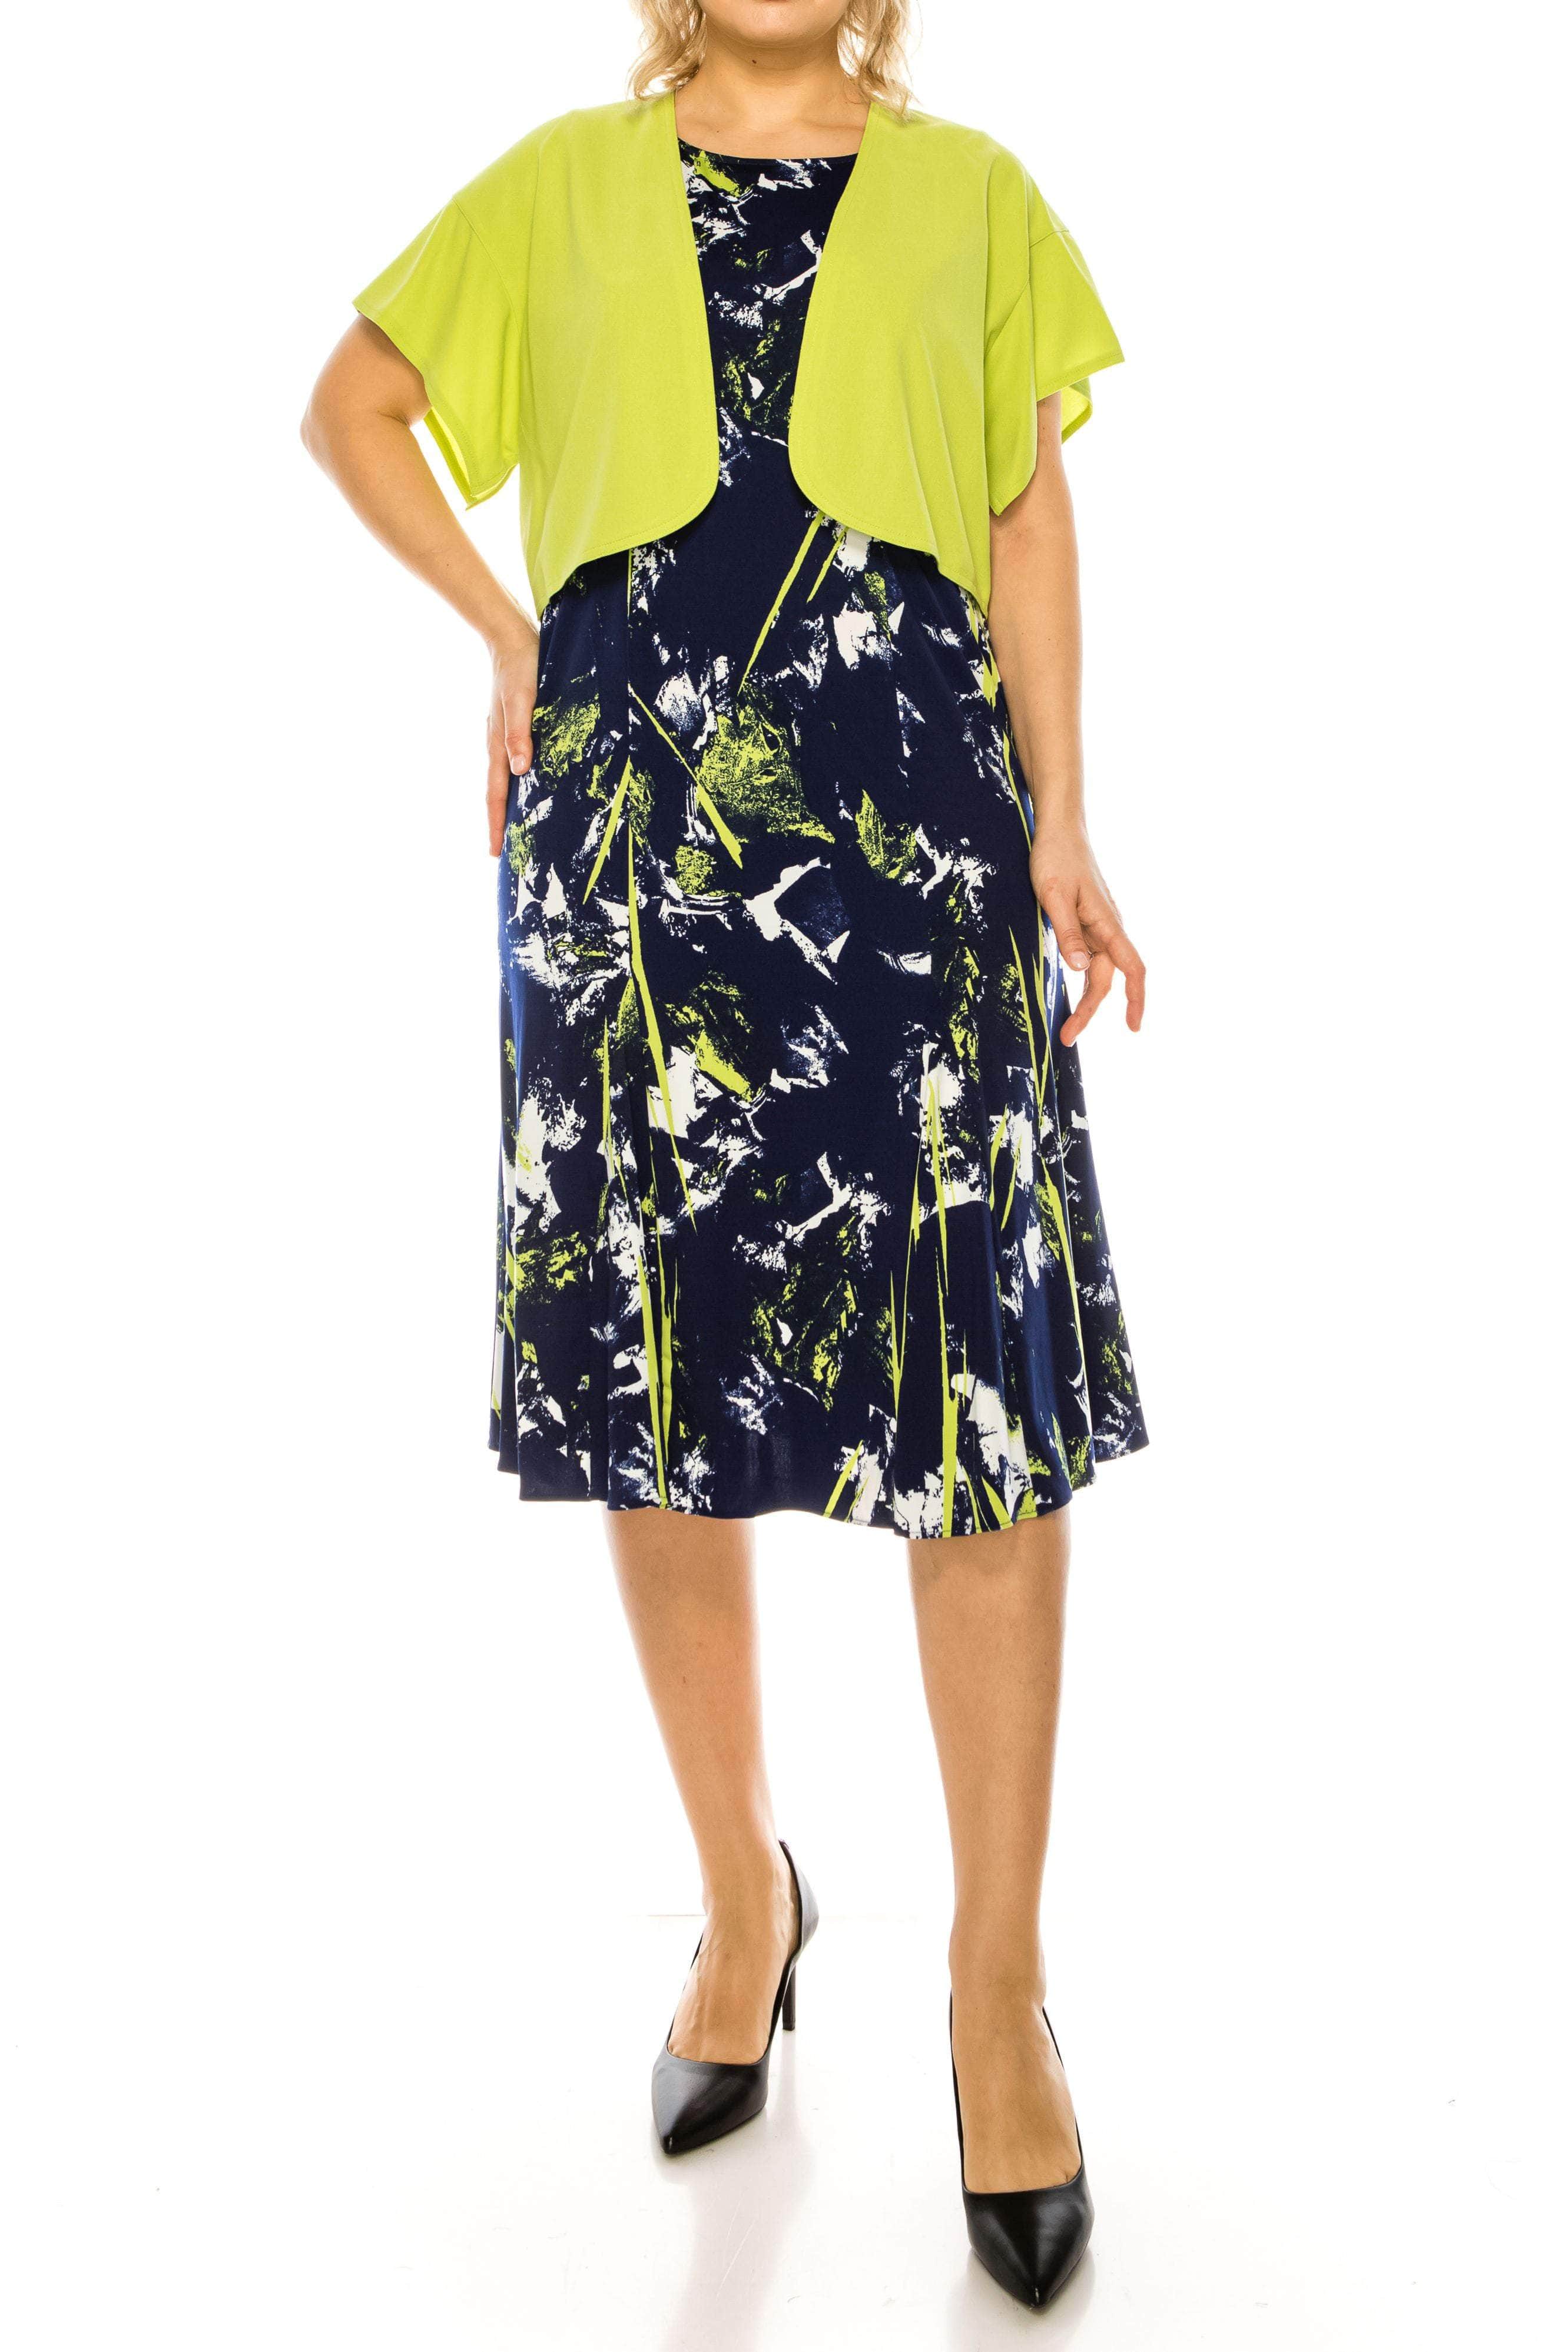 Maya Brooke 28369 - Apple Green Multicolor Print Dress With Jacket
